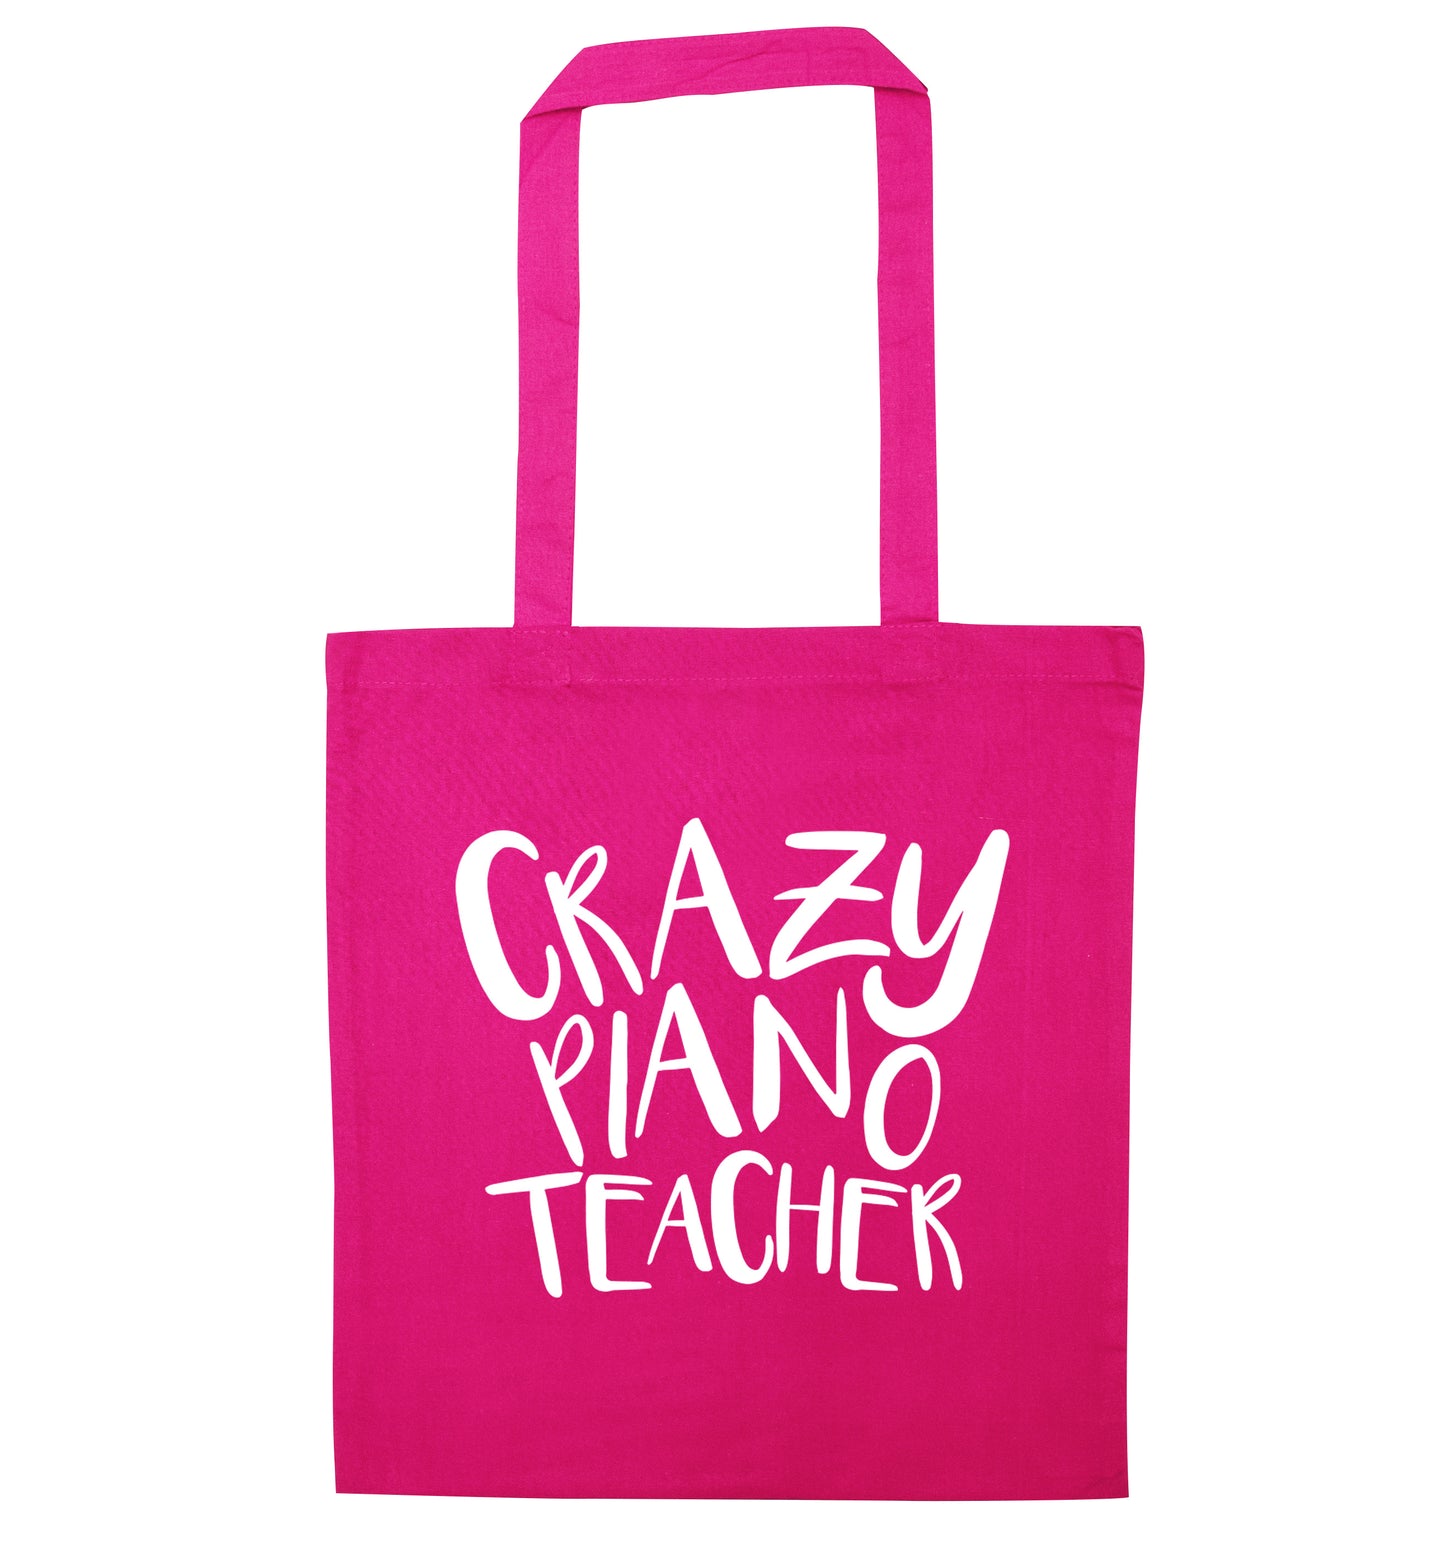 Crazy piano teacher pink tote bag